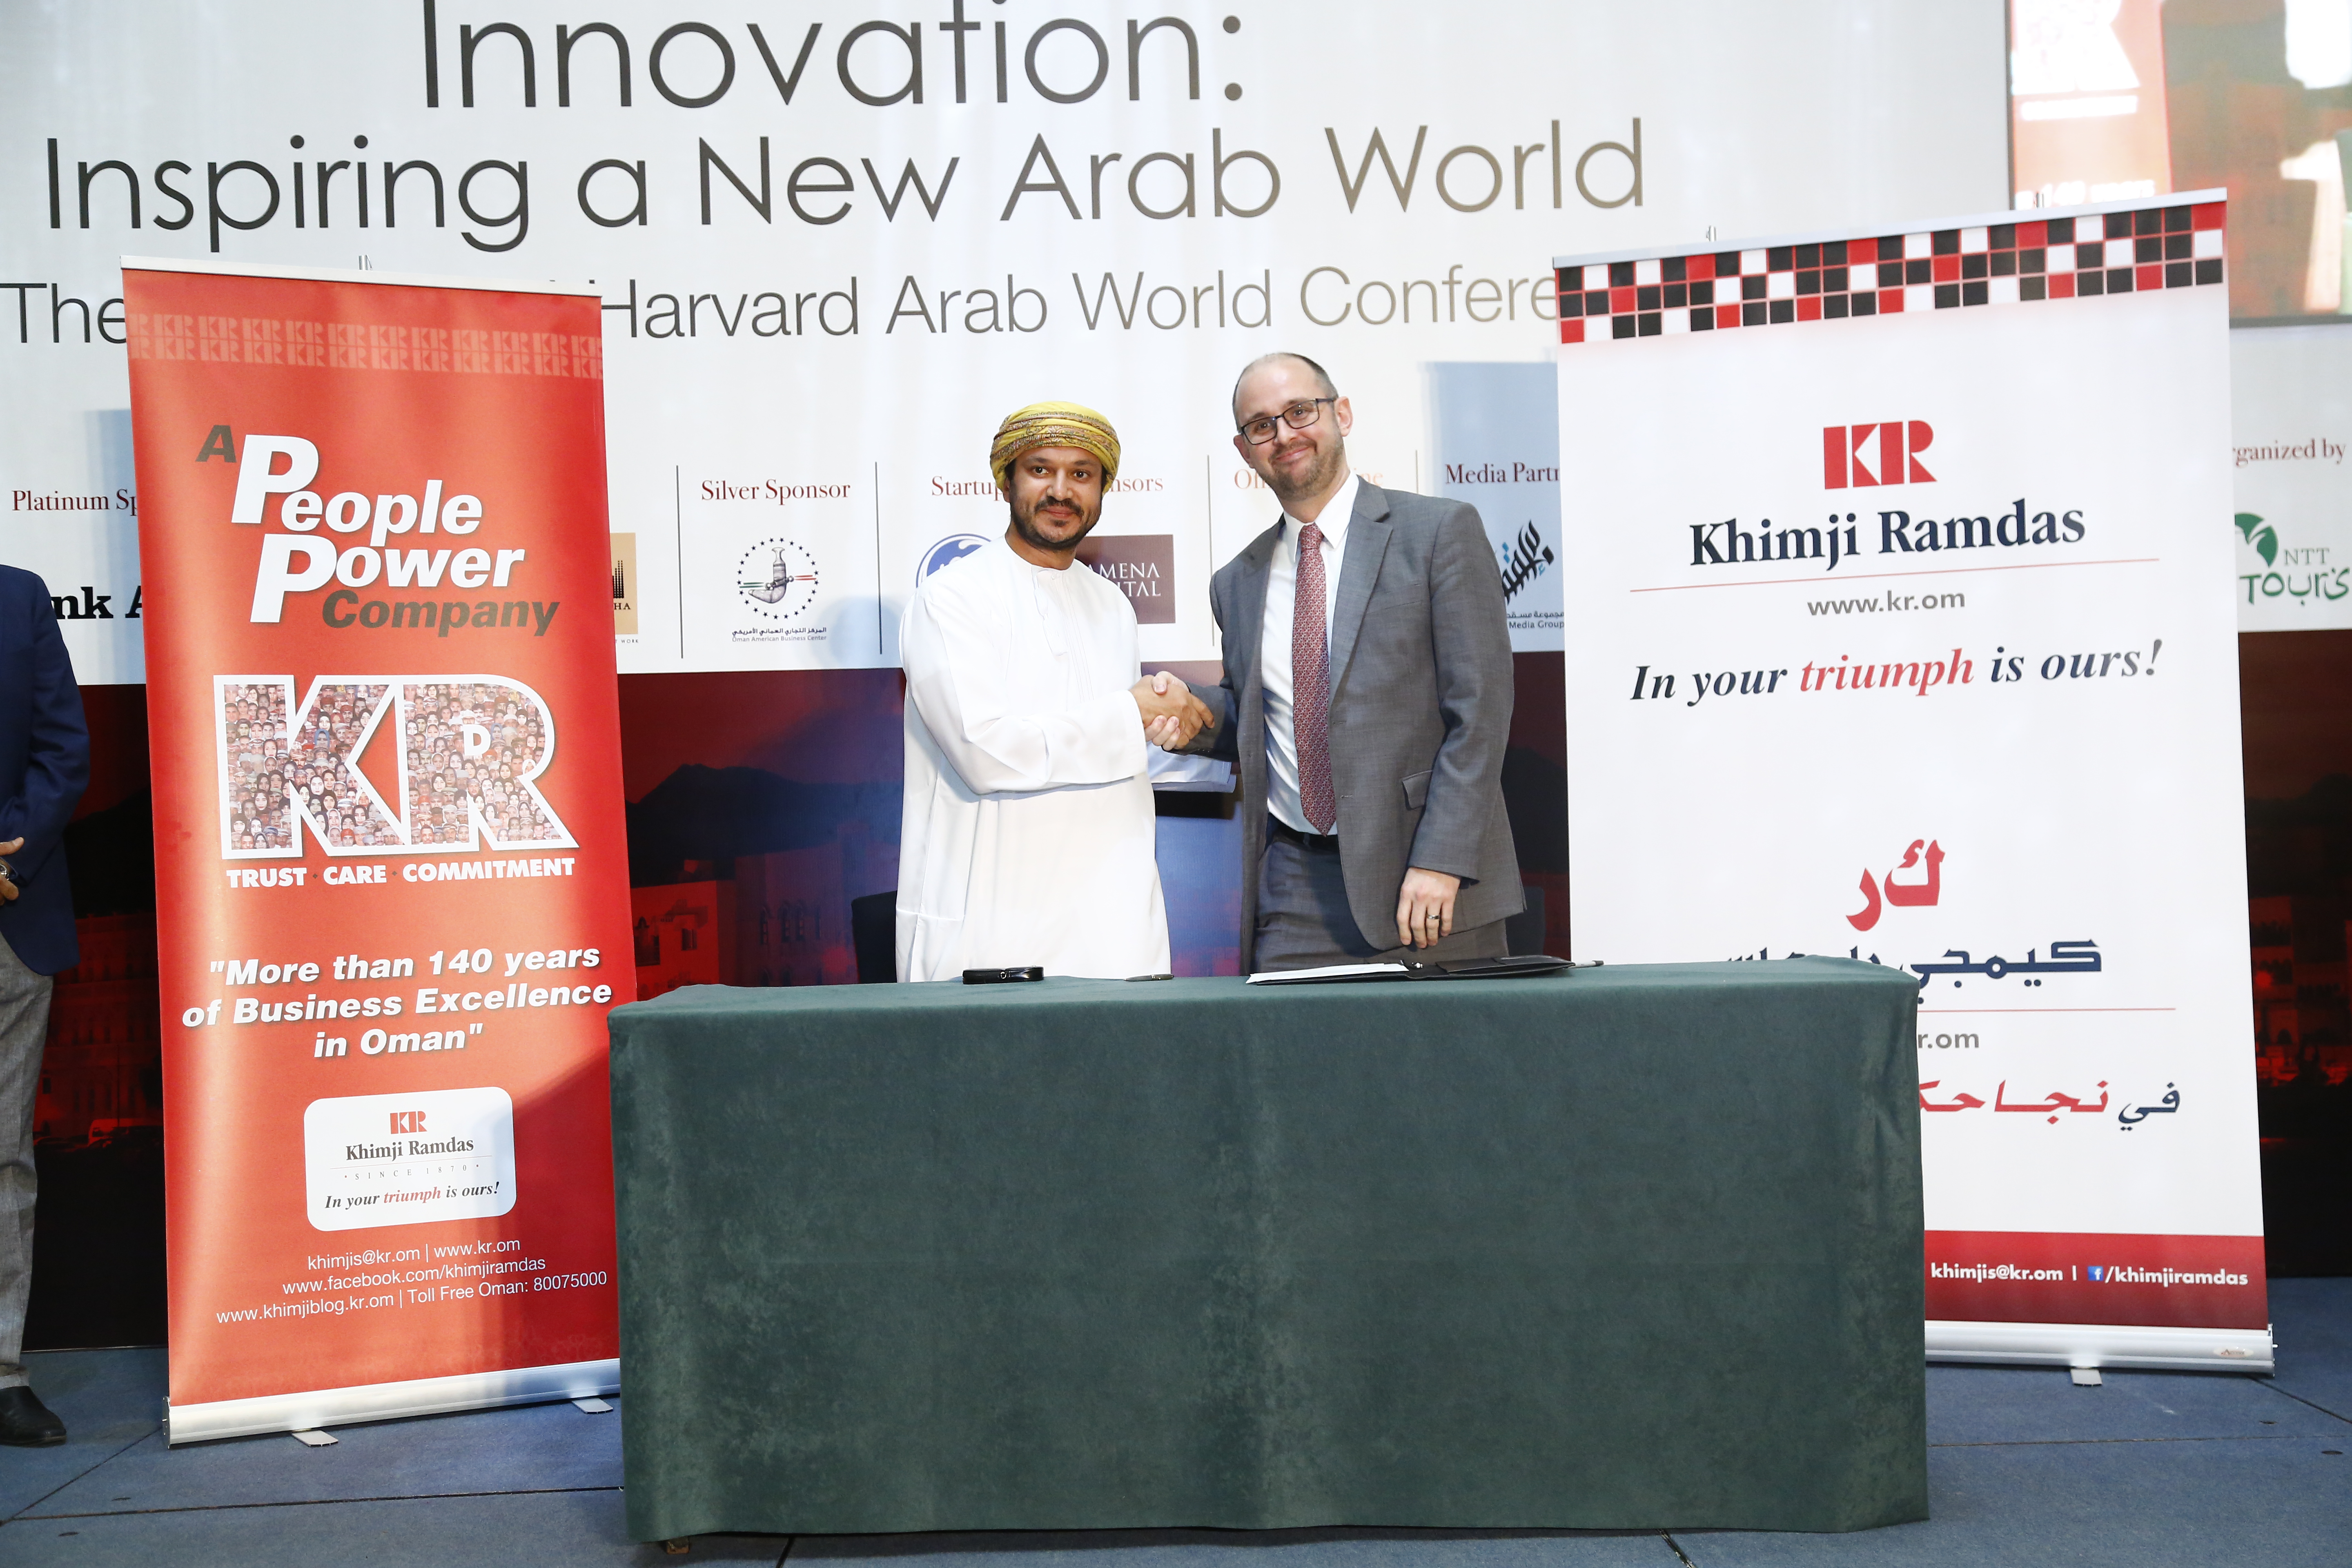 Khimji Ramdas to set up Harvard University scholarships for Omani students